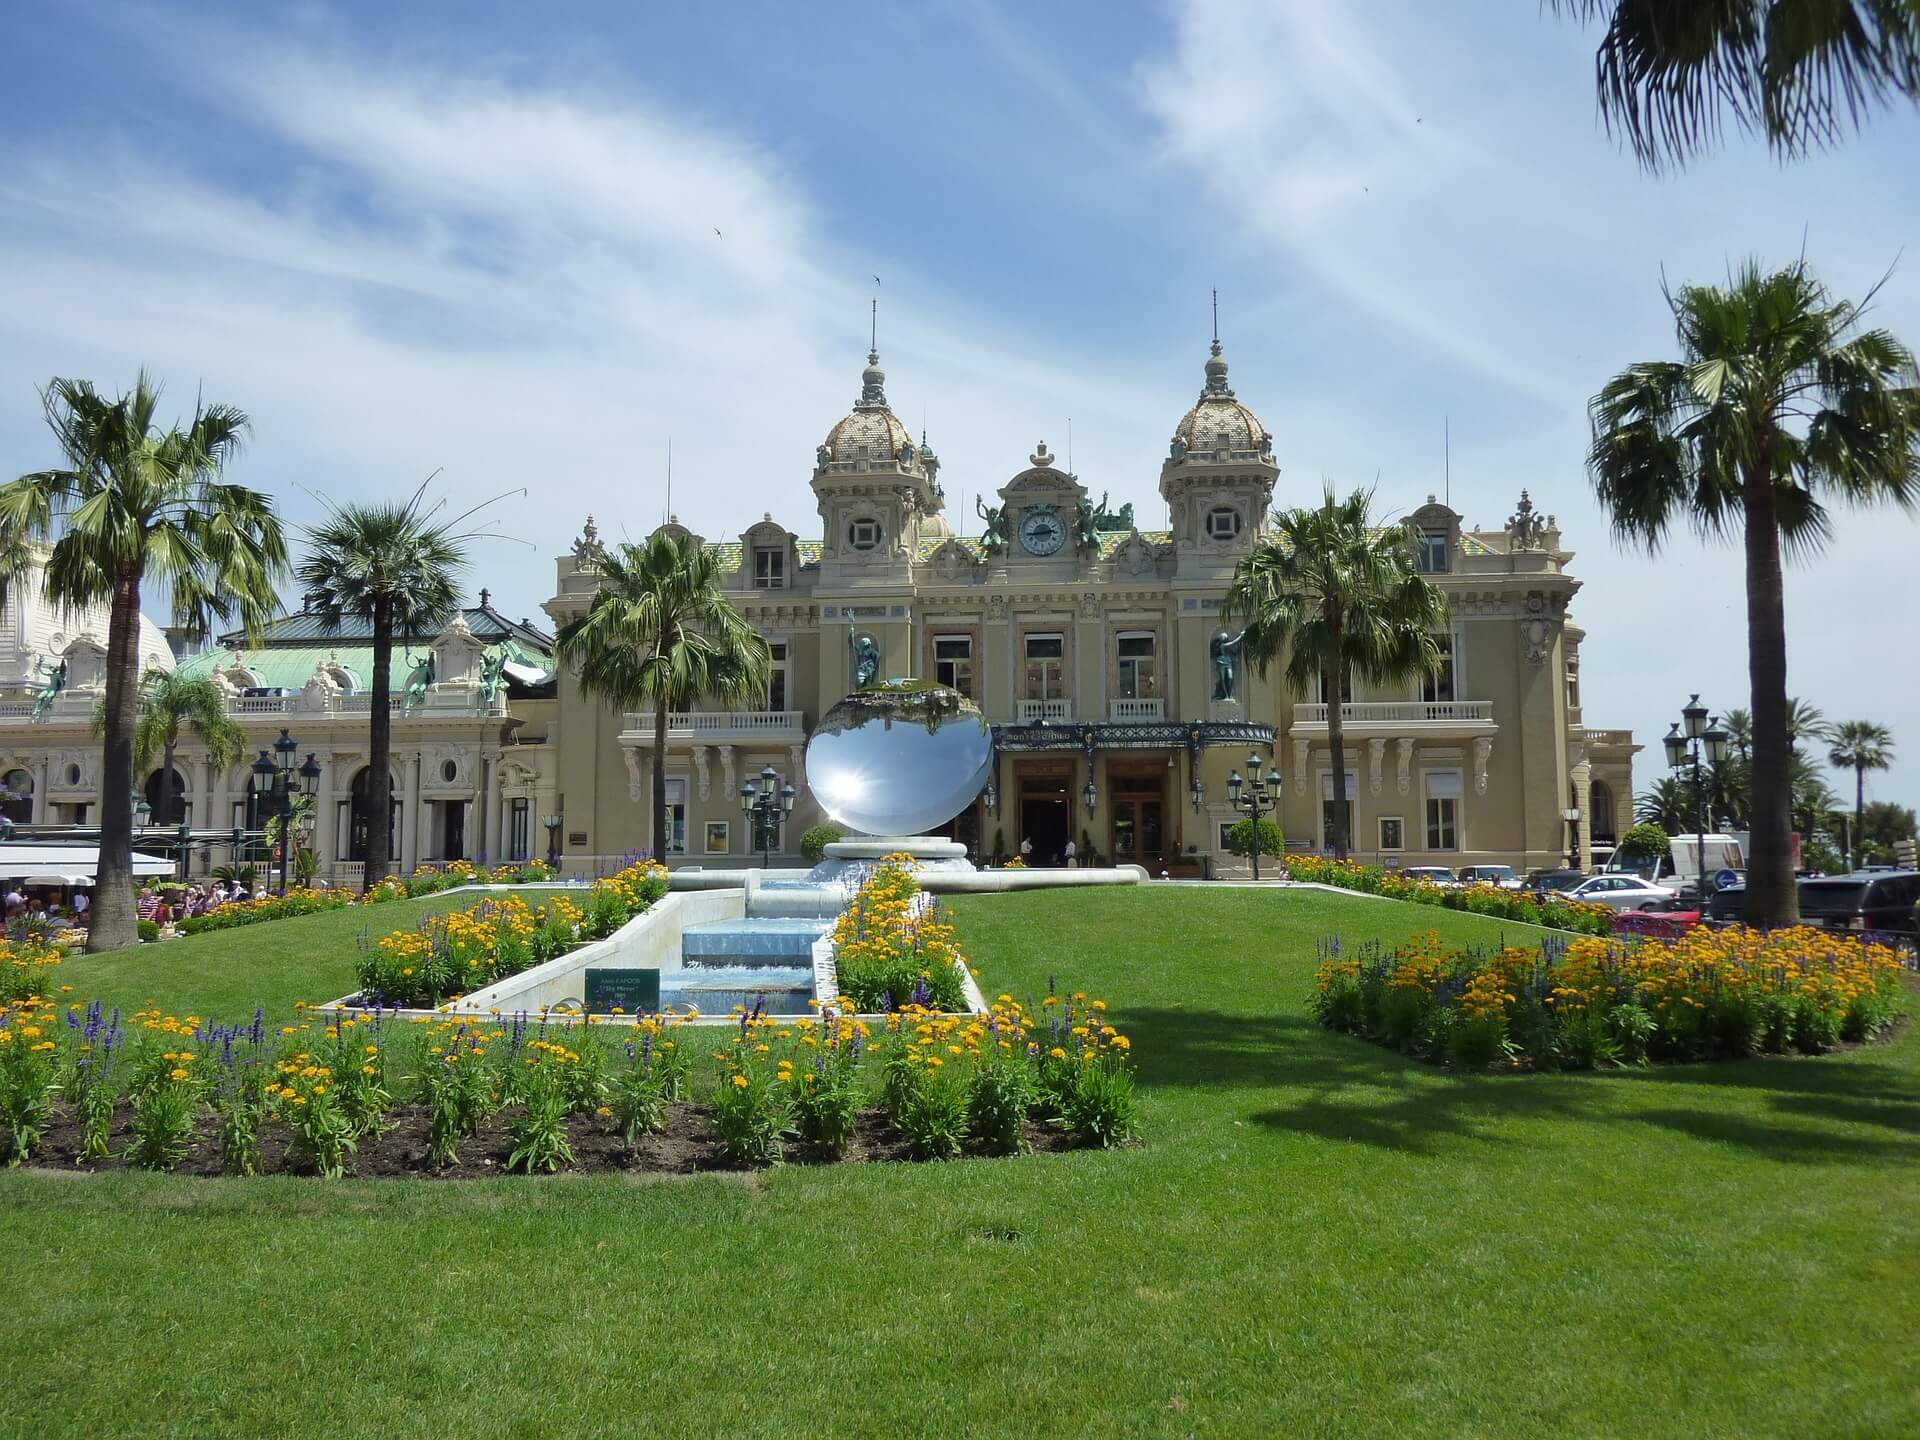 Die luxuriösten Casino Resorts weltweit - Spielbank Monte Carlo in Monaco